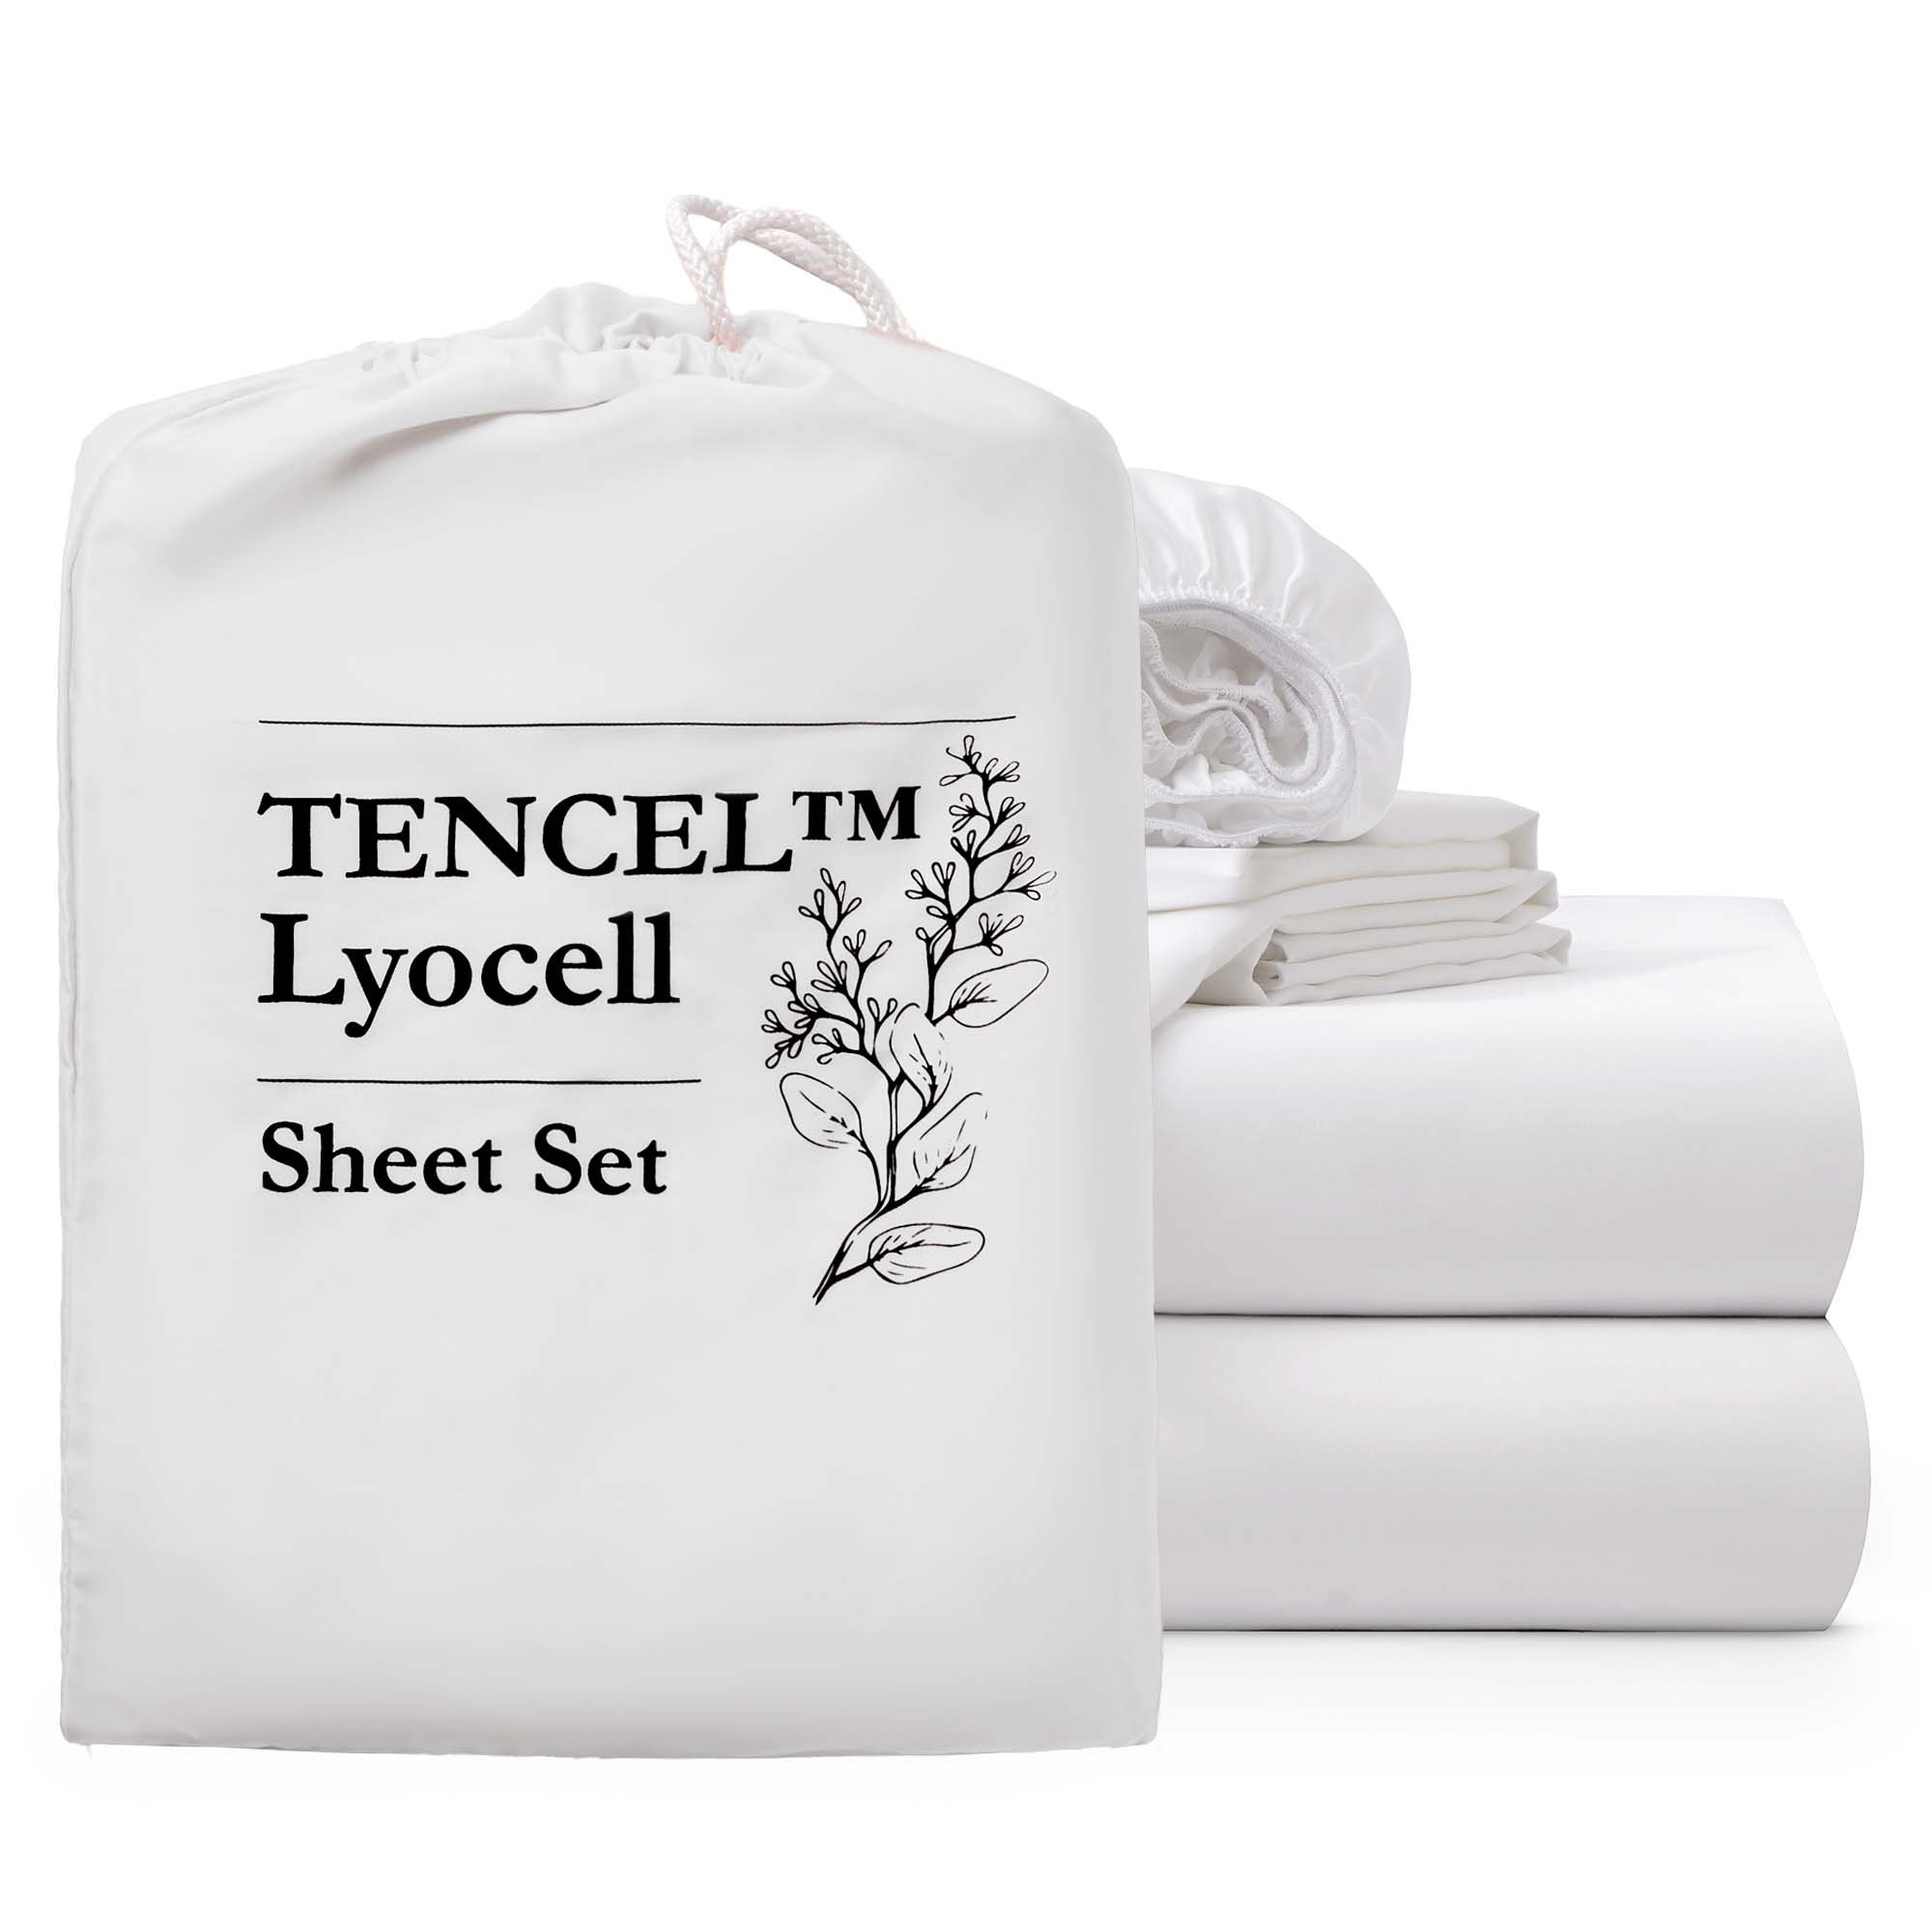 Silky Soft TENCELâ¢ Lyocell Cooling Sheet Set-Breathability And Moisture-wicking Bedding Set - Quiet Grey, Queen